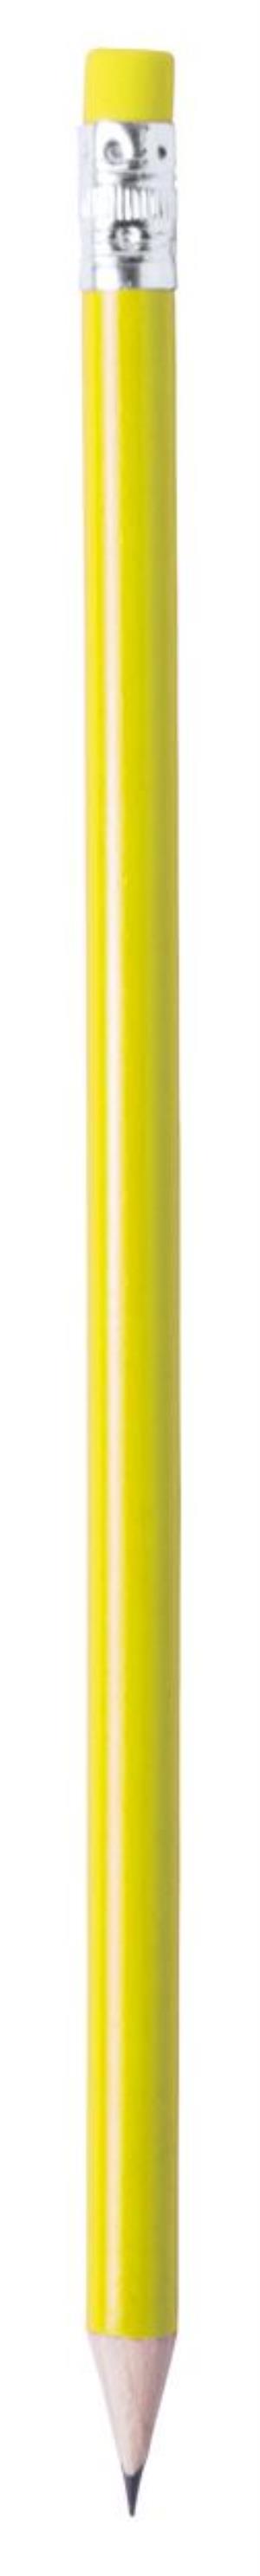 Drevená ceruzka Melart, žltá